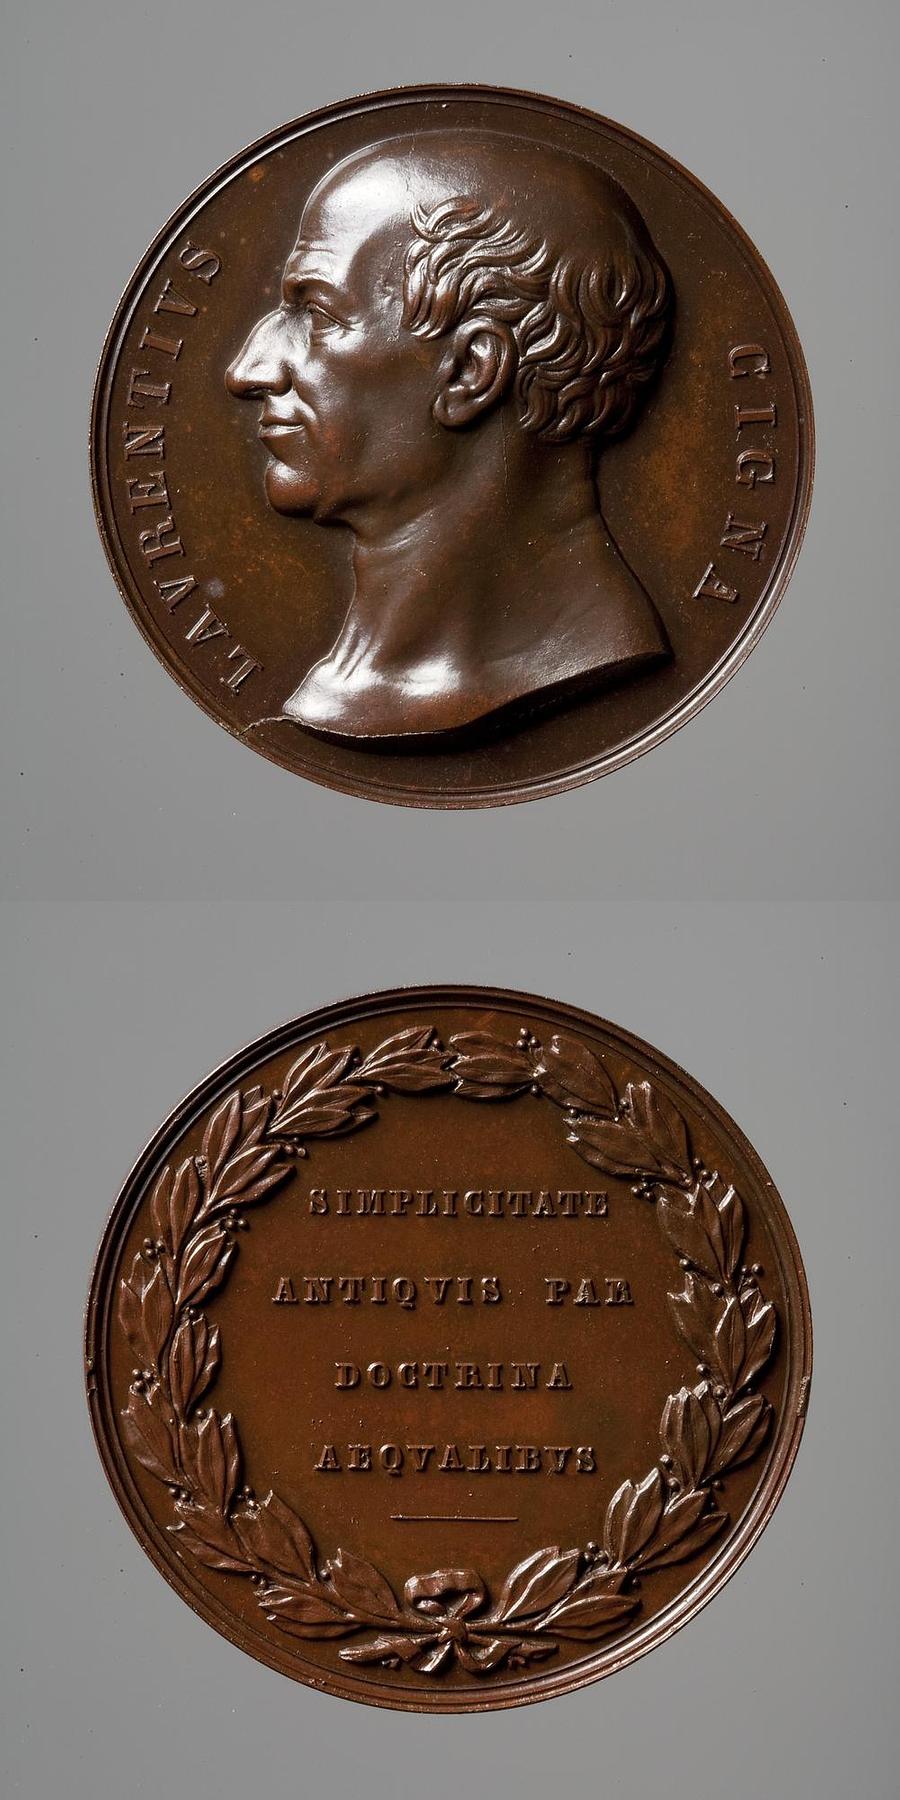 Medal obverse: Larentius Cigna. Medal reverse: Laurel wreath and inscription, F67